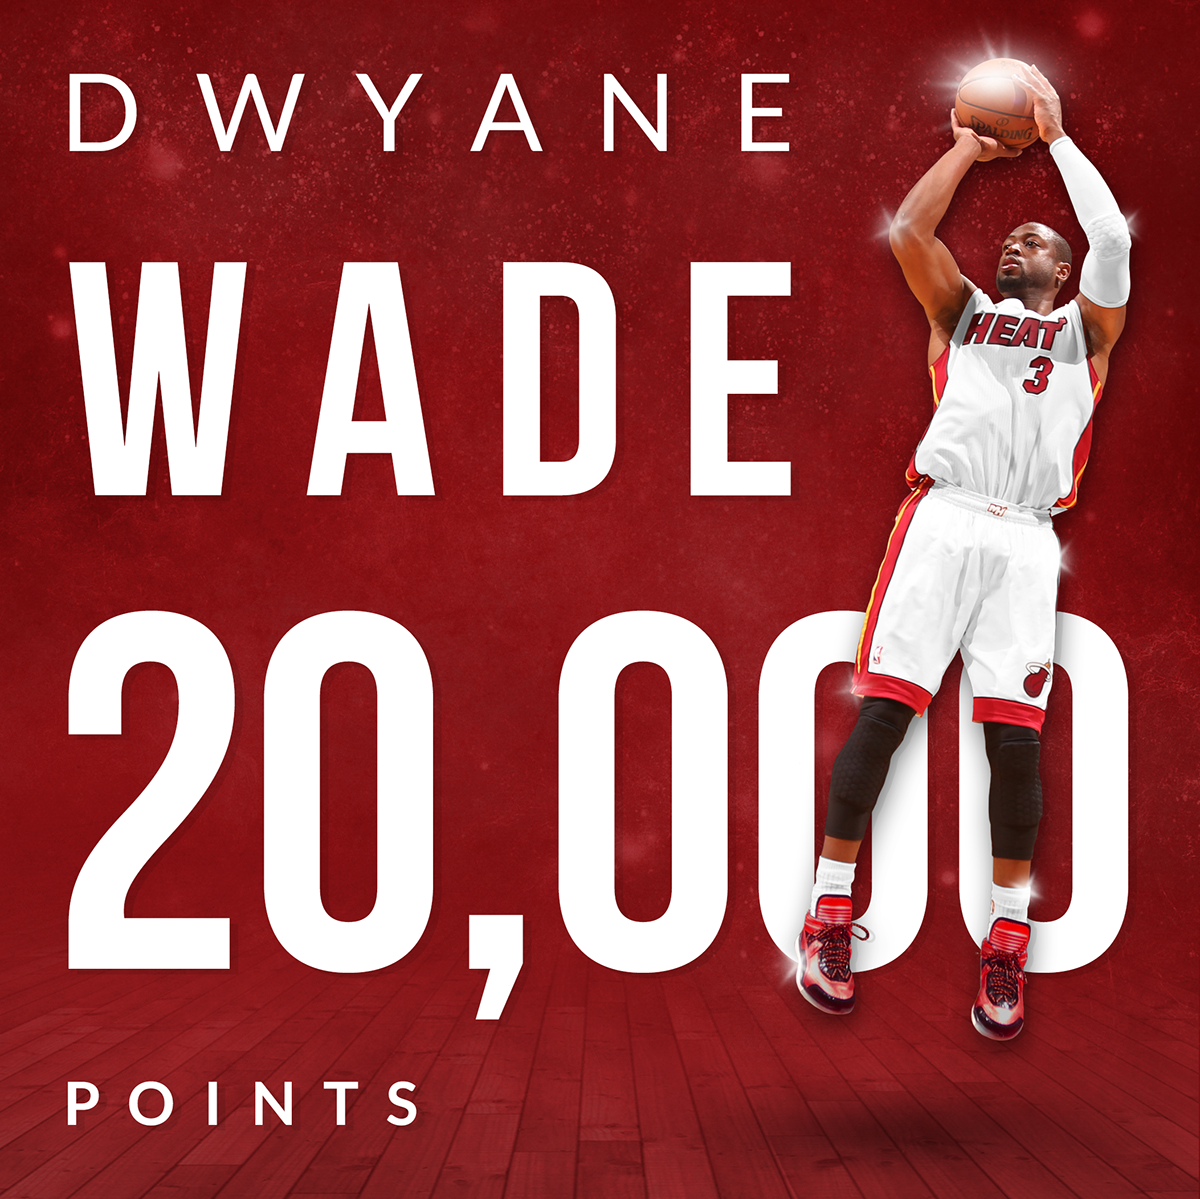 Adobe Portfolio dwyane wade Miami Heat NBA basketball sport career achievement artwork design miami heat